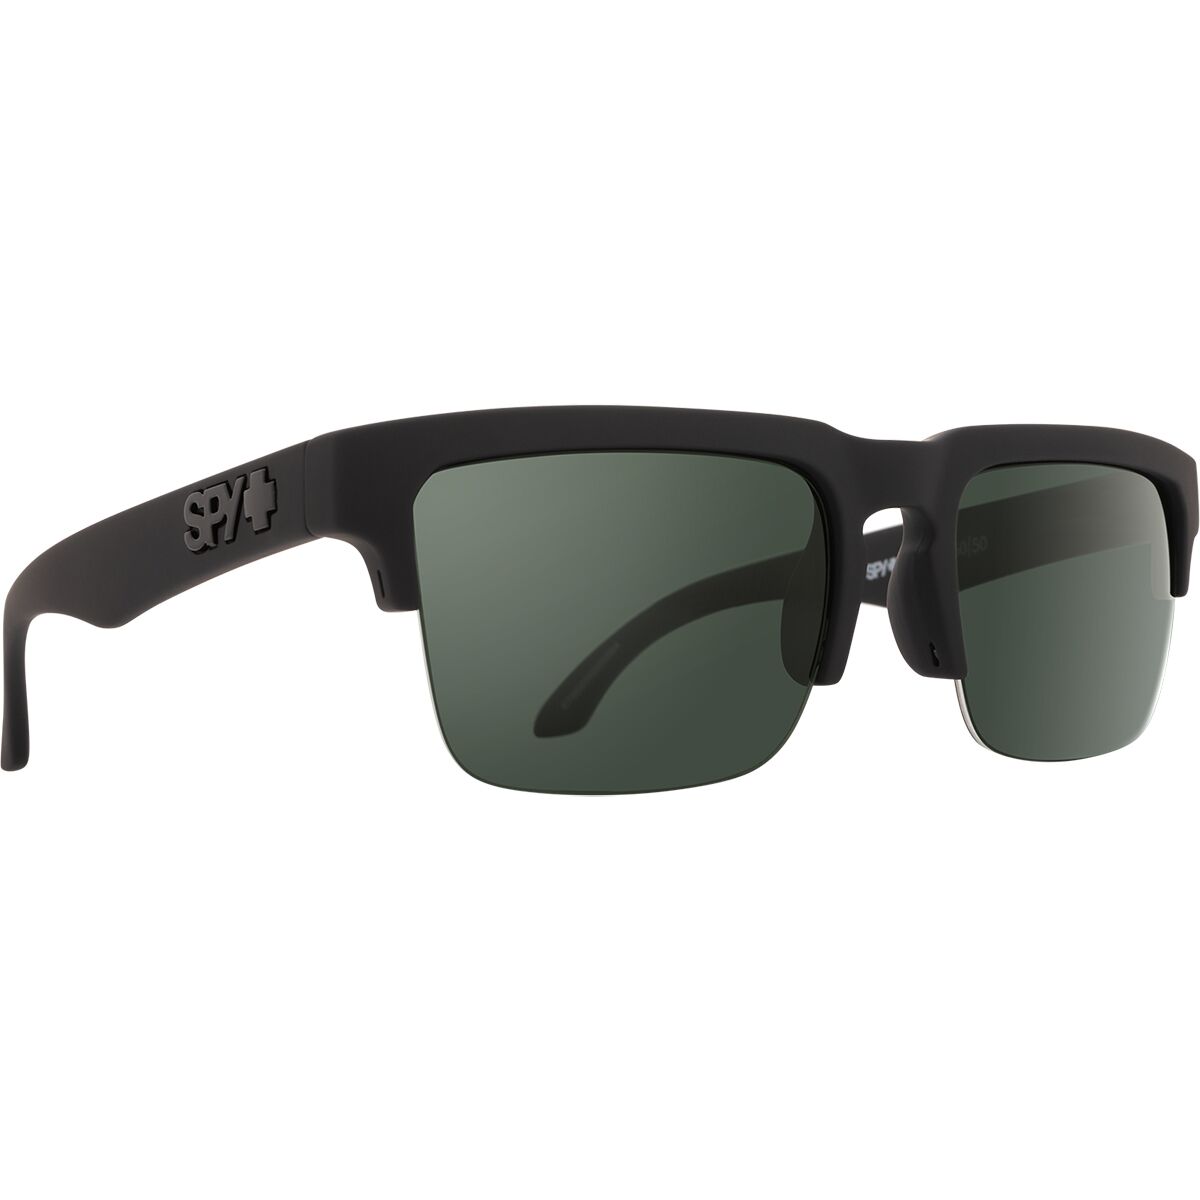 Spy Helm 5050 Polarized Sunglasses